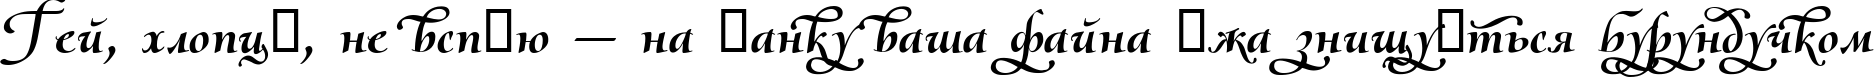 Пример написания шрифтом Olietta script Lyrica BoldItalic текста на украинском